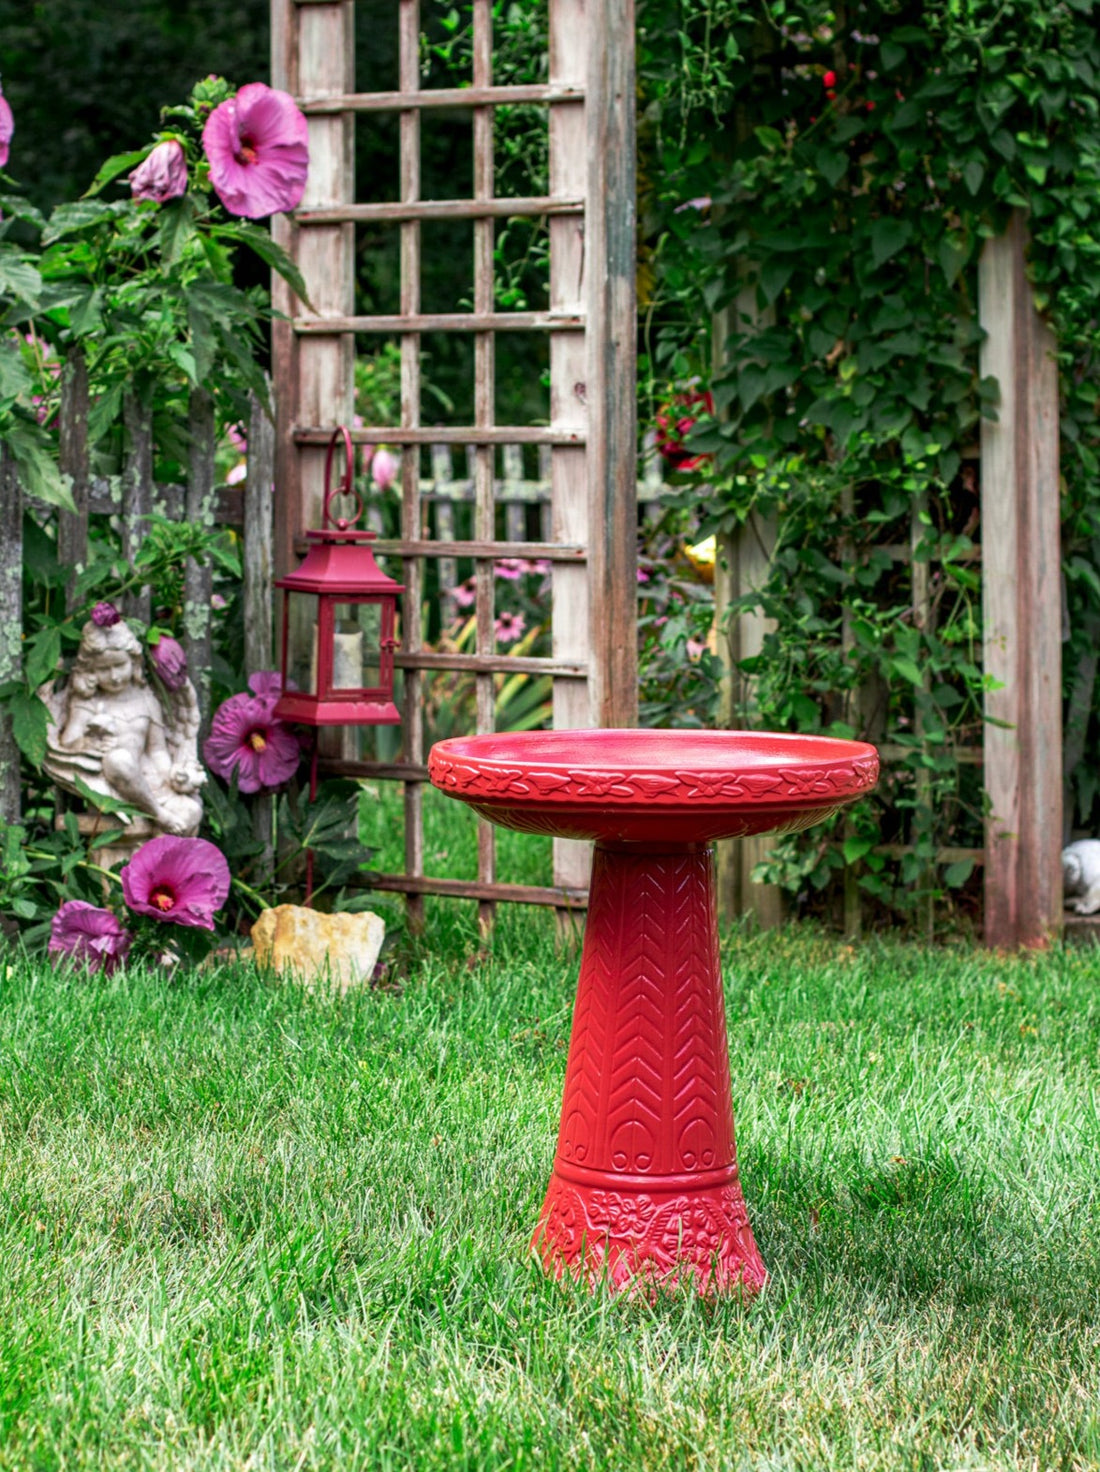 ceramic red glazed birdbath set with birds flowers and a chevron design in a landscaped garden setting